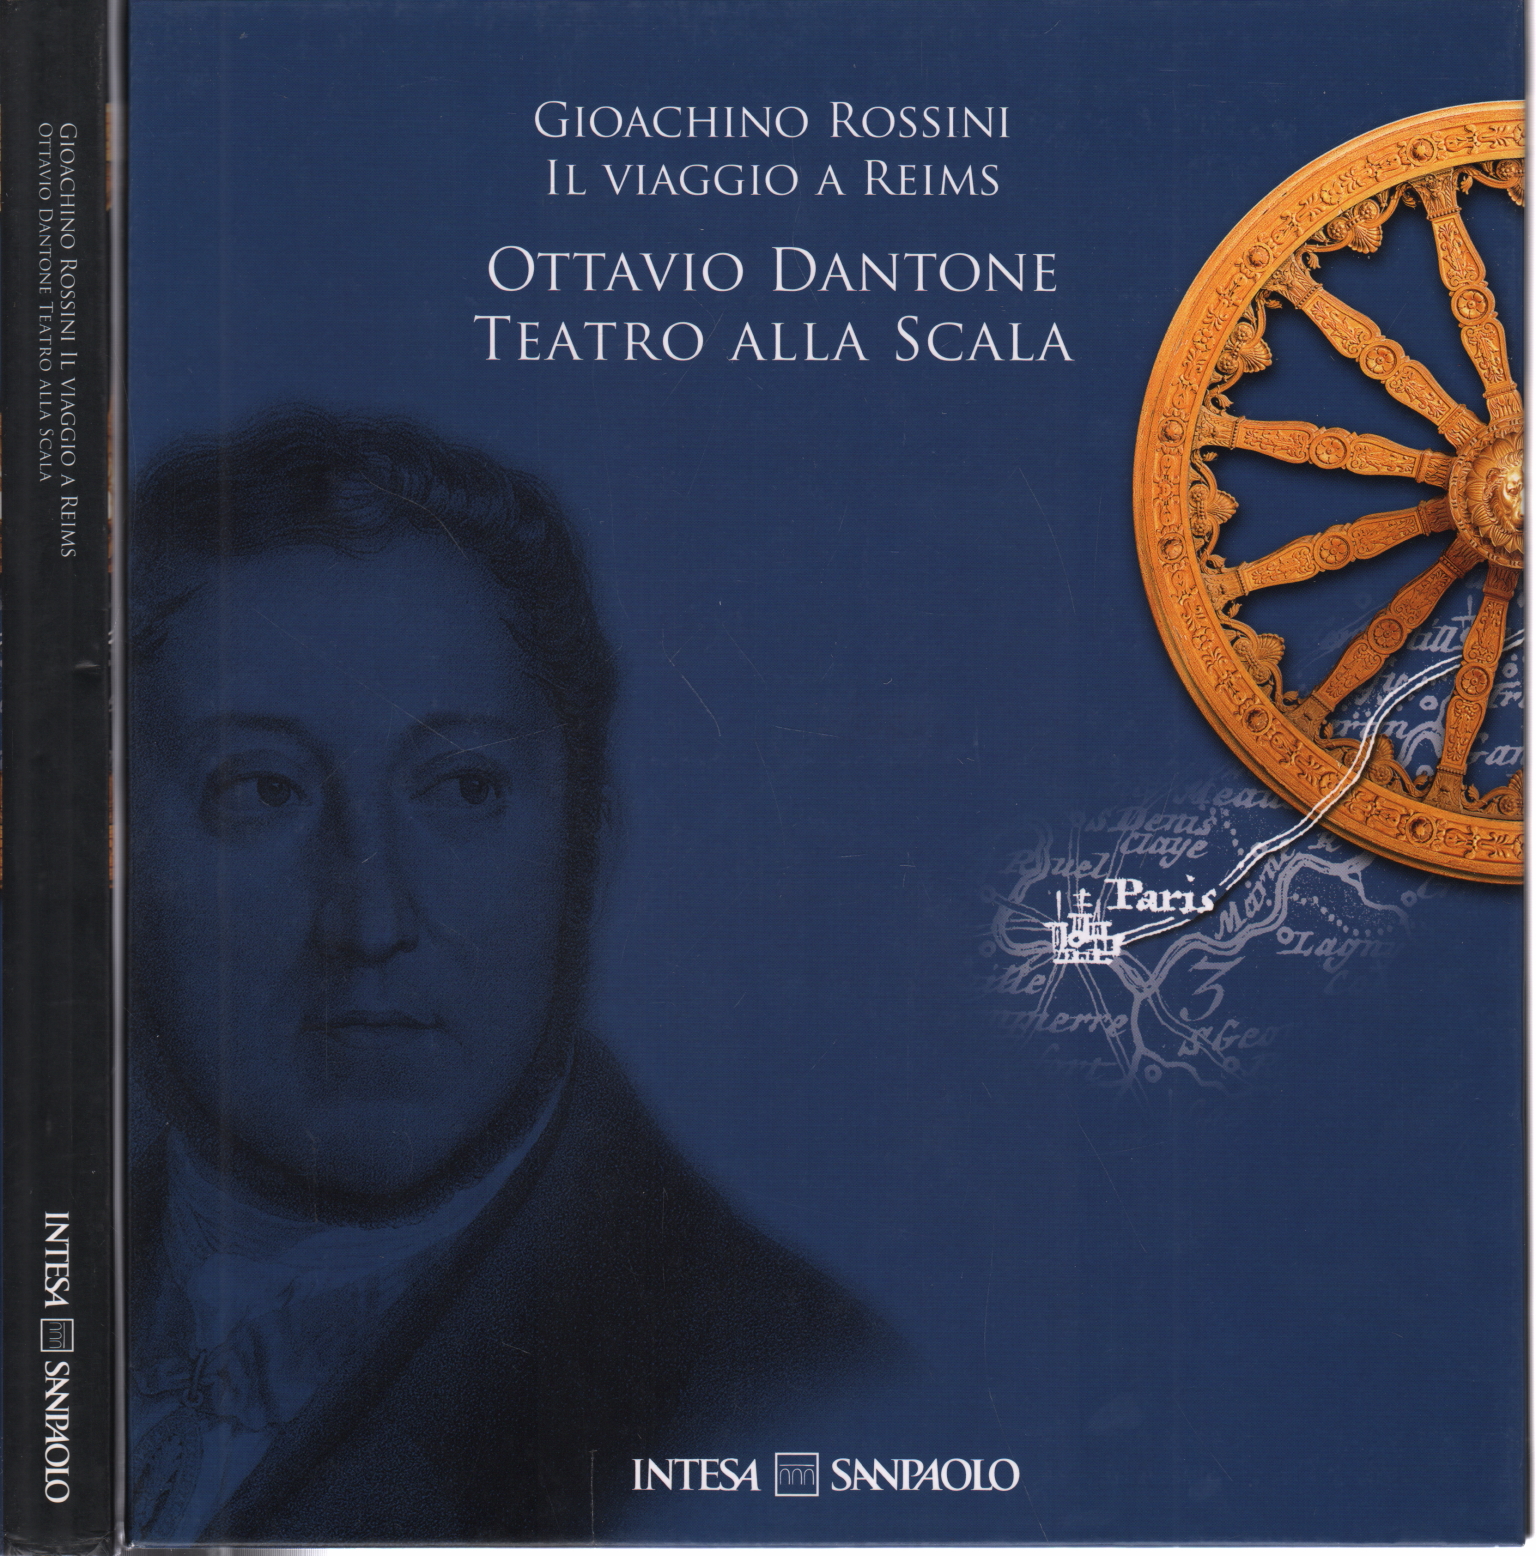 Gioacchino Rossini "Die reise nach Reims" von Ottavio D, Gioacchino Rossini